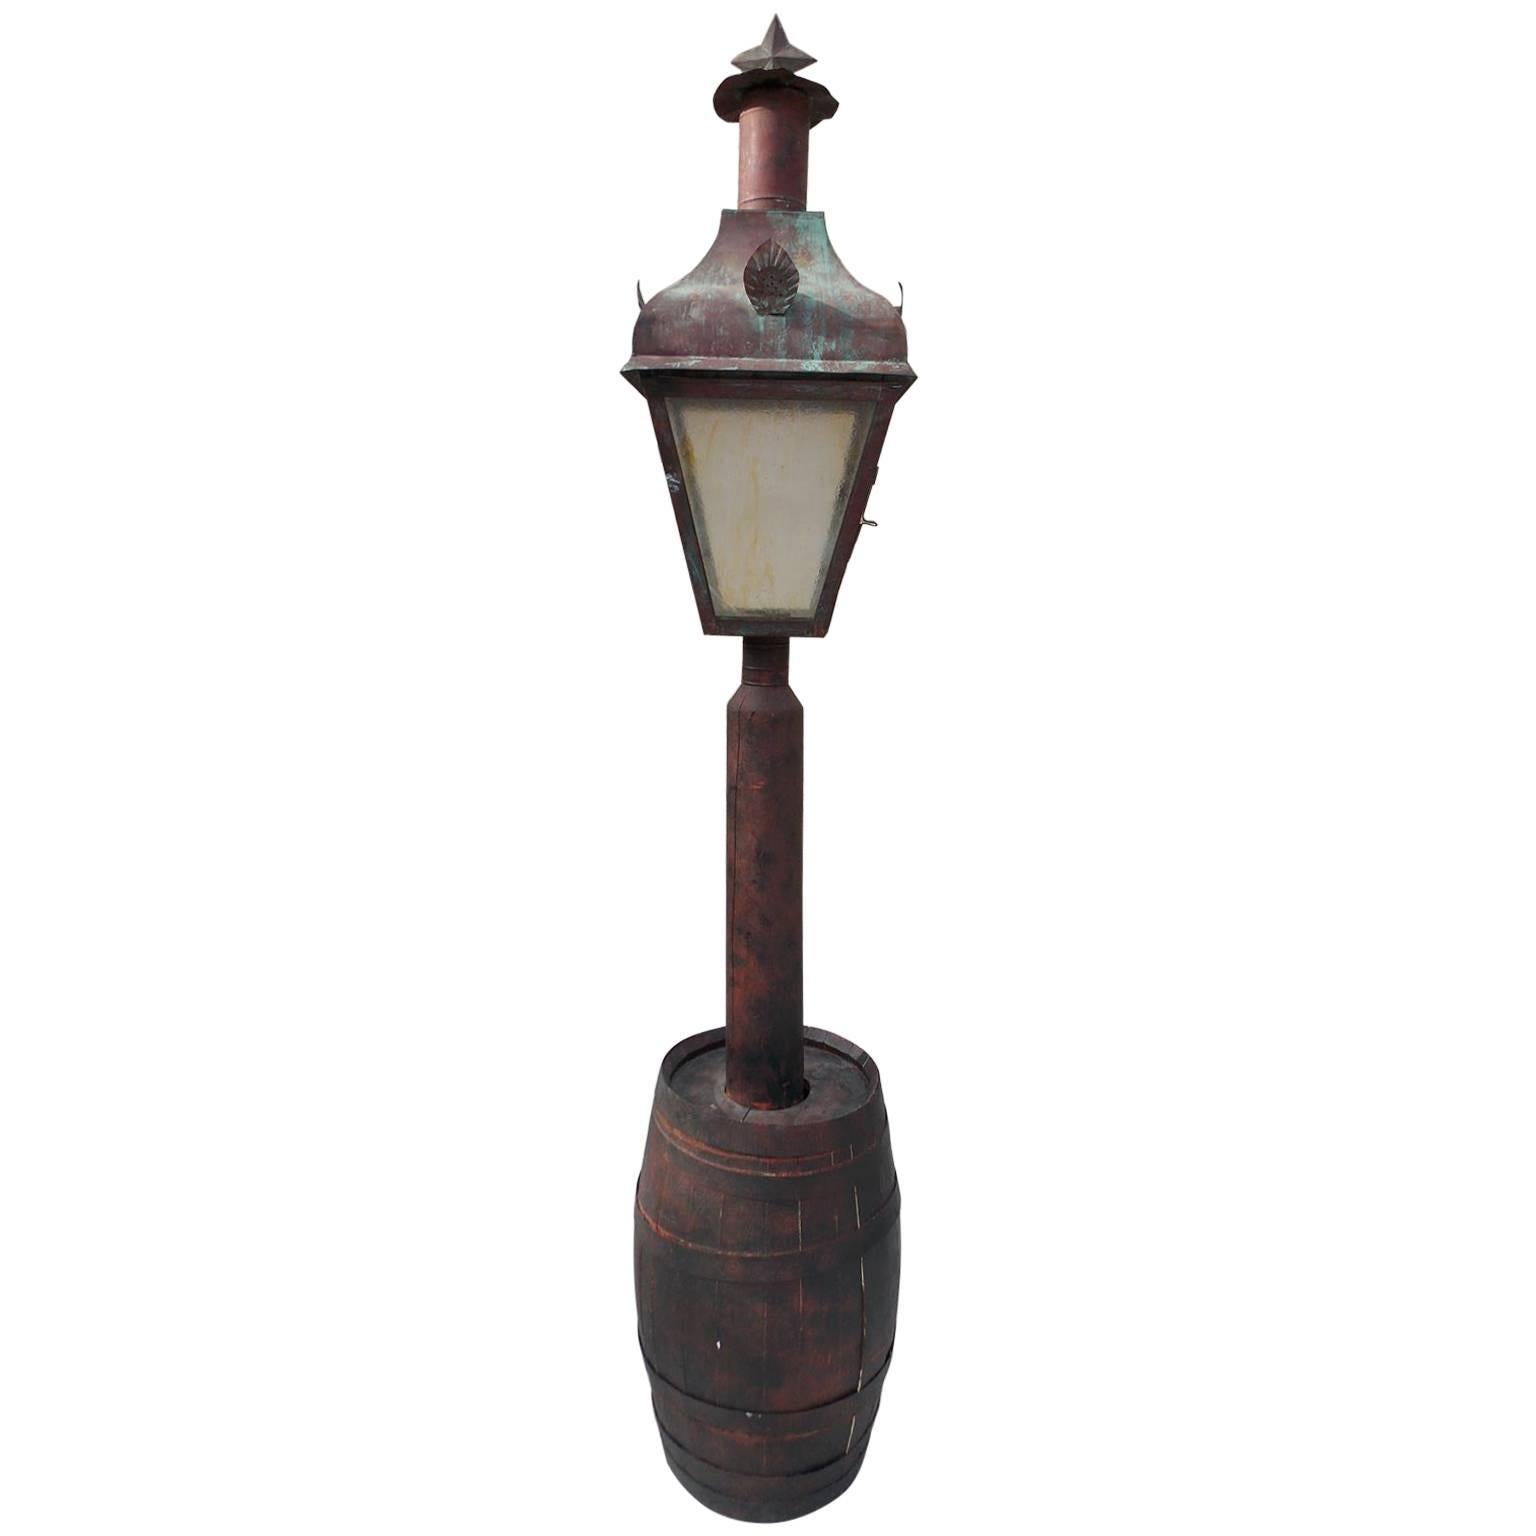 American Copper Street Lantern in Wooden Barrel, Sturbridge, MA., Circa 1820 For Sale